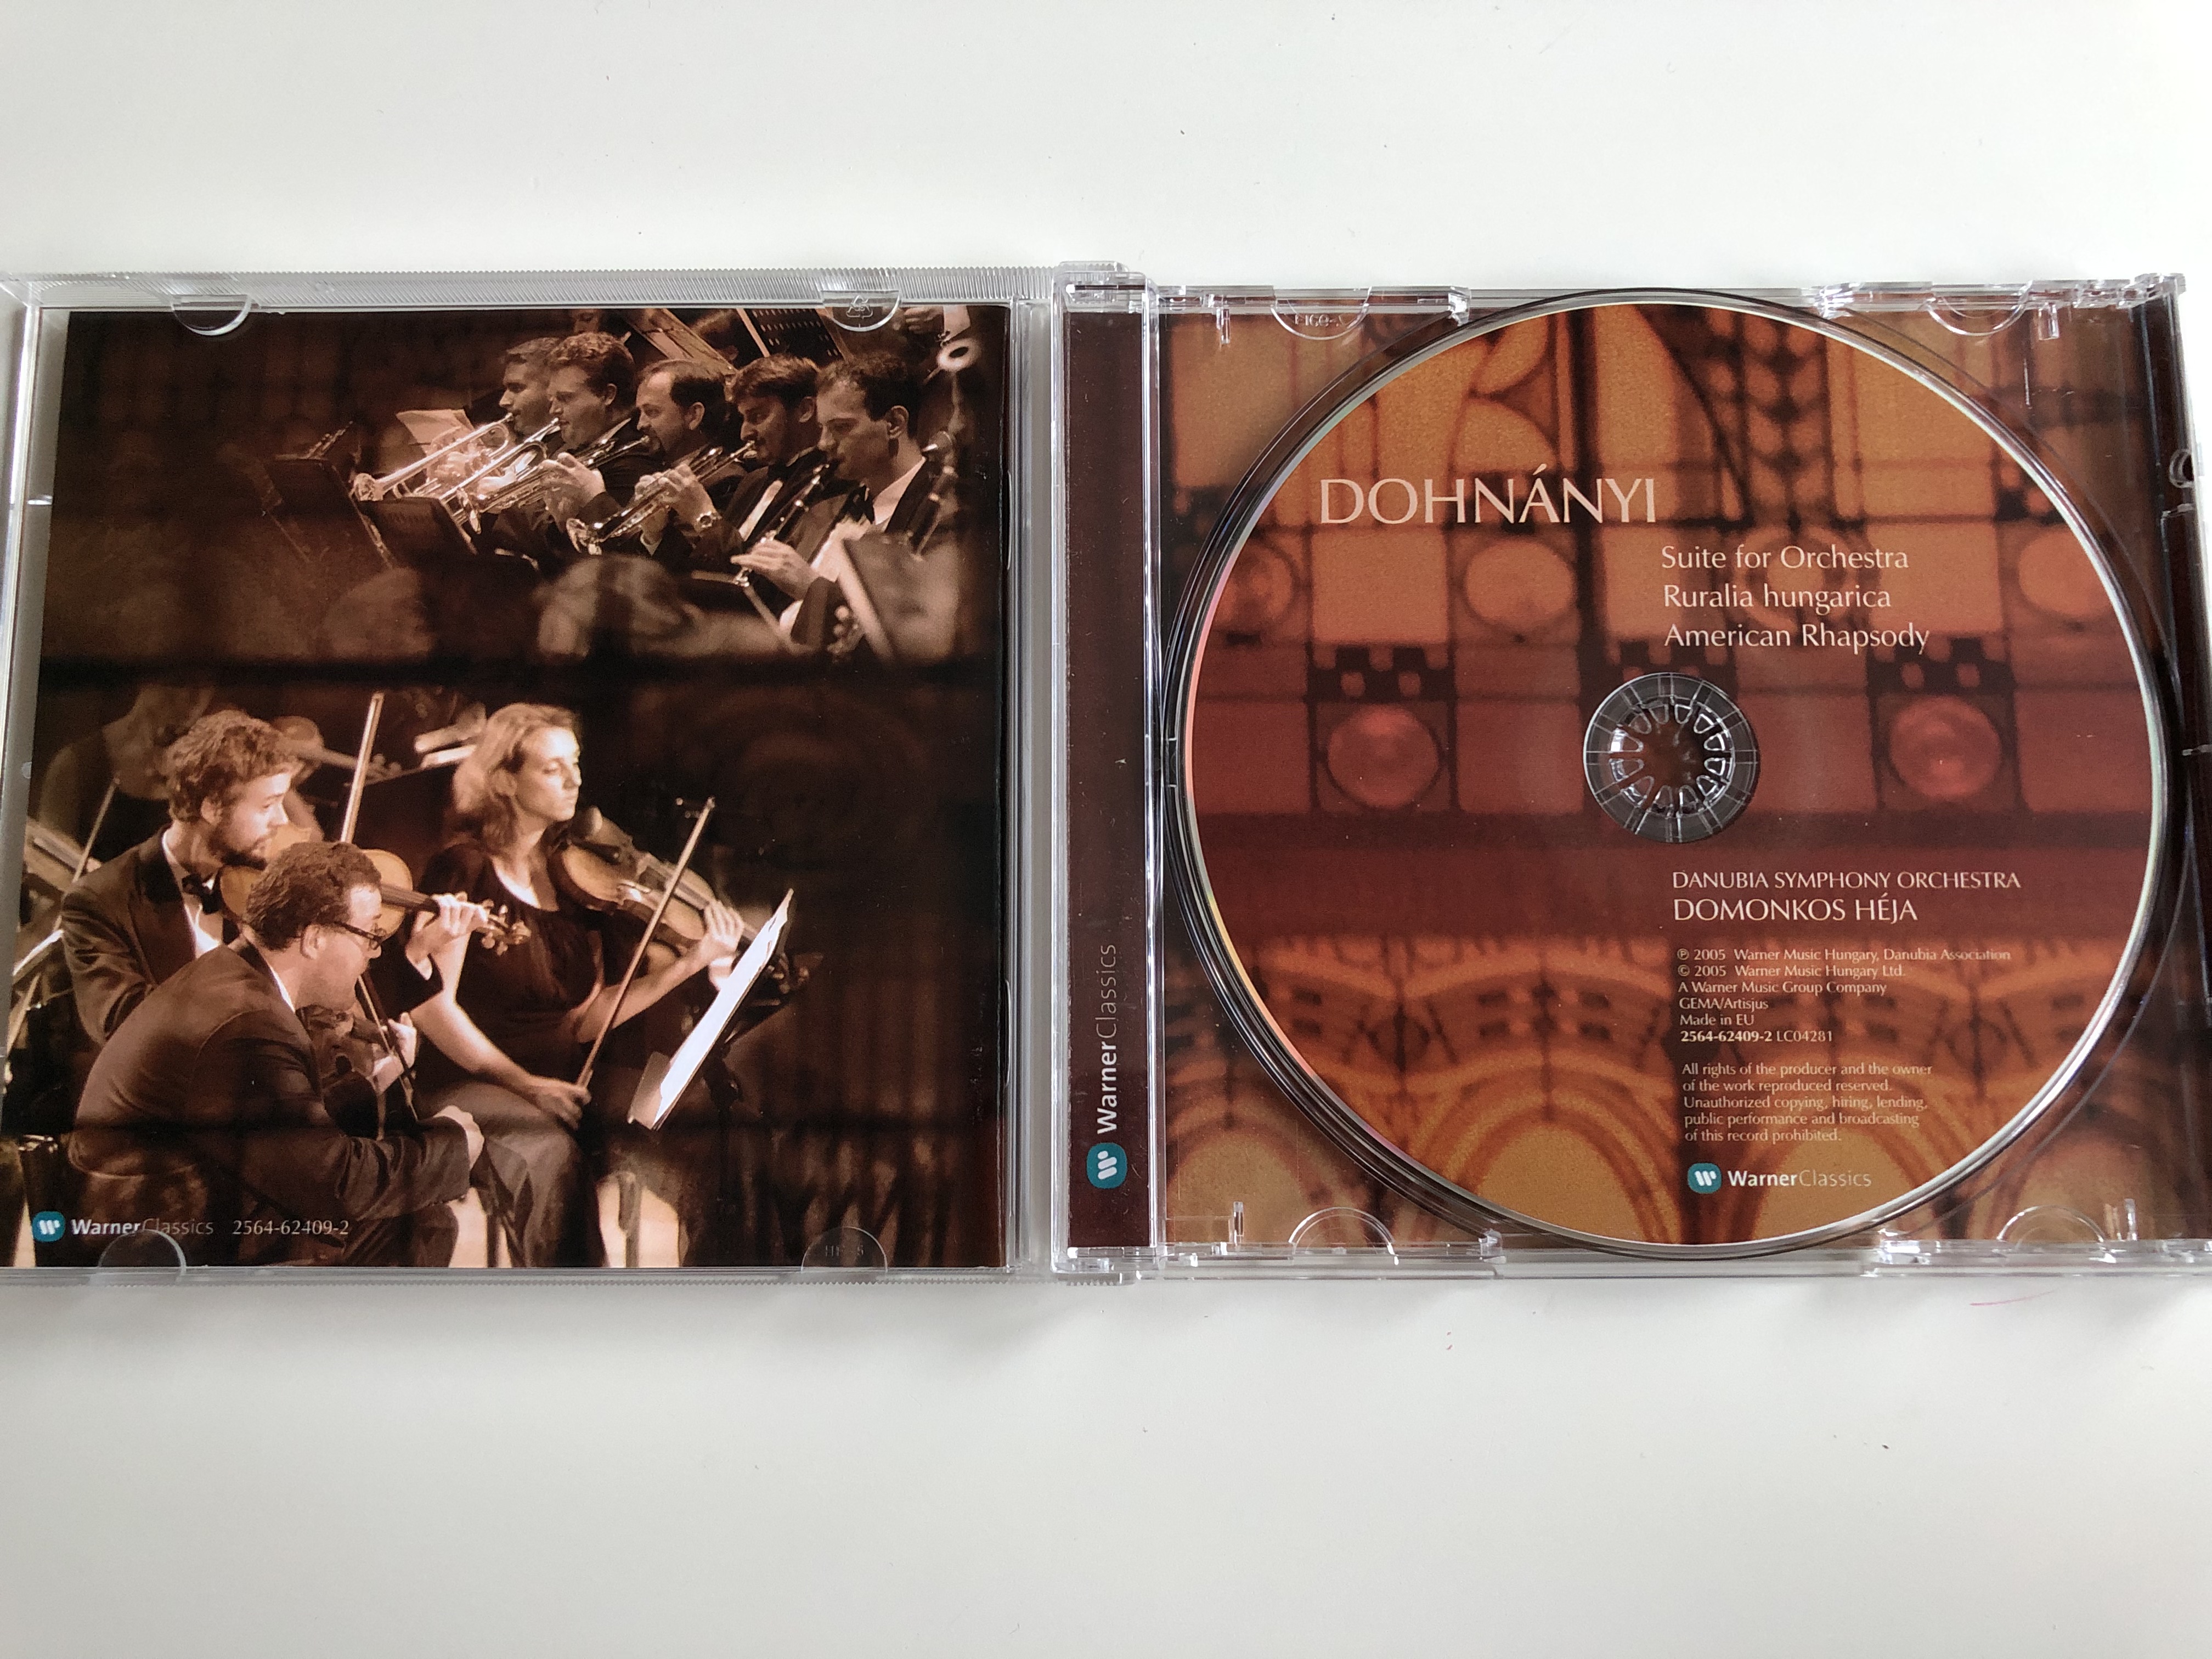 suite-for-orchestra-ruralia-hungarica-american-rhapsody-audio-cd-2005-ern-dohn-nyi-danubia-symphony-orchestra-domonkos-h-ja-warner-classics-9-.jpg